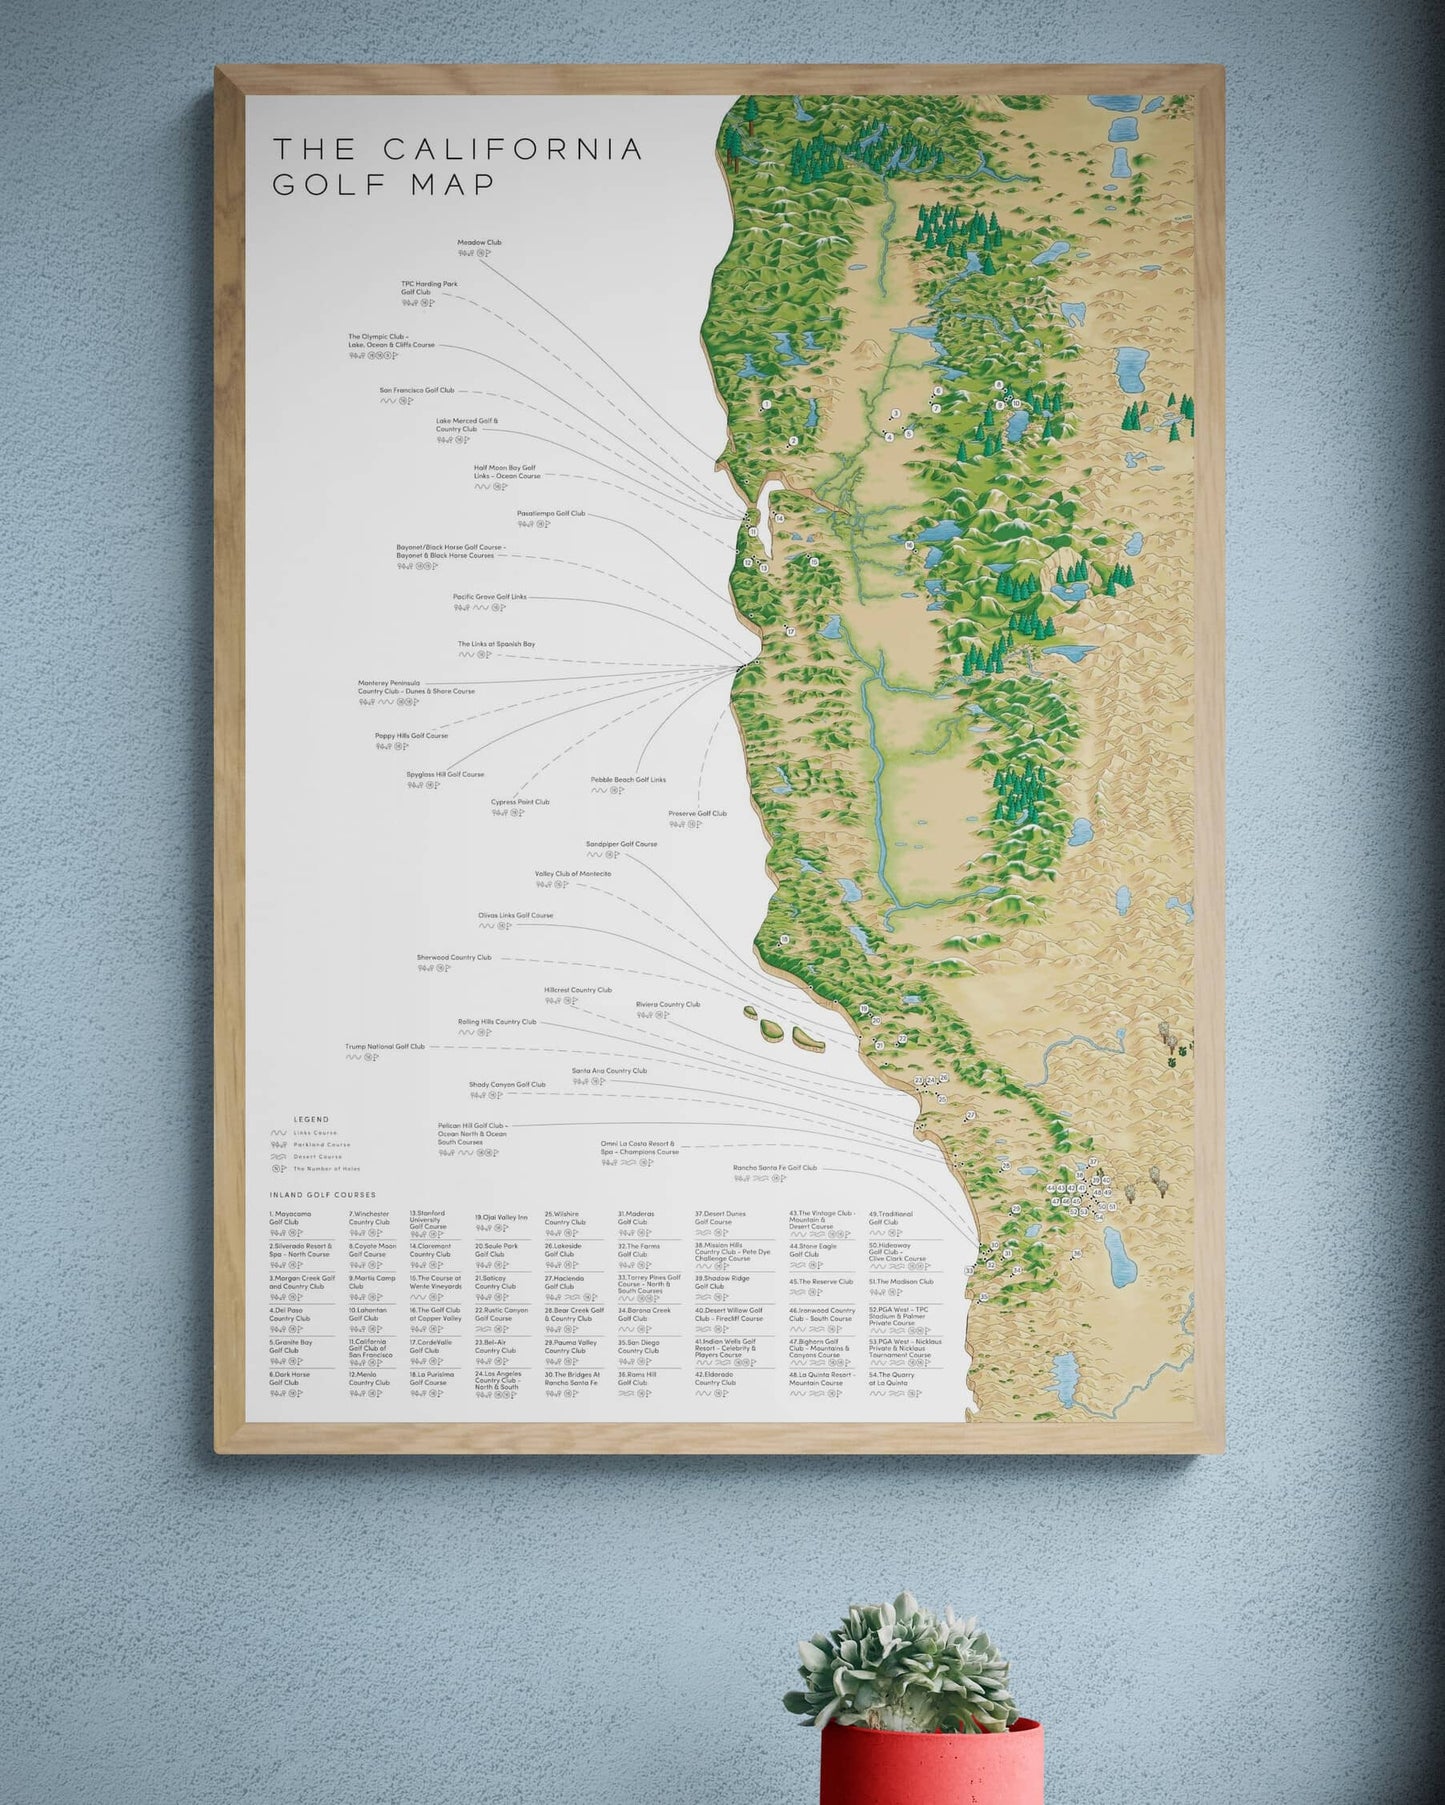 The California Golf Map